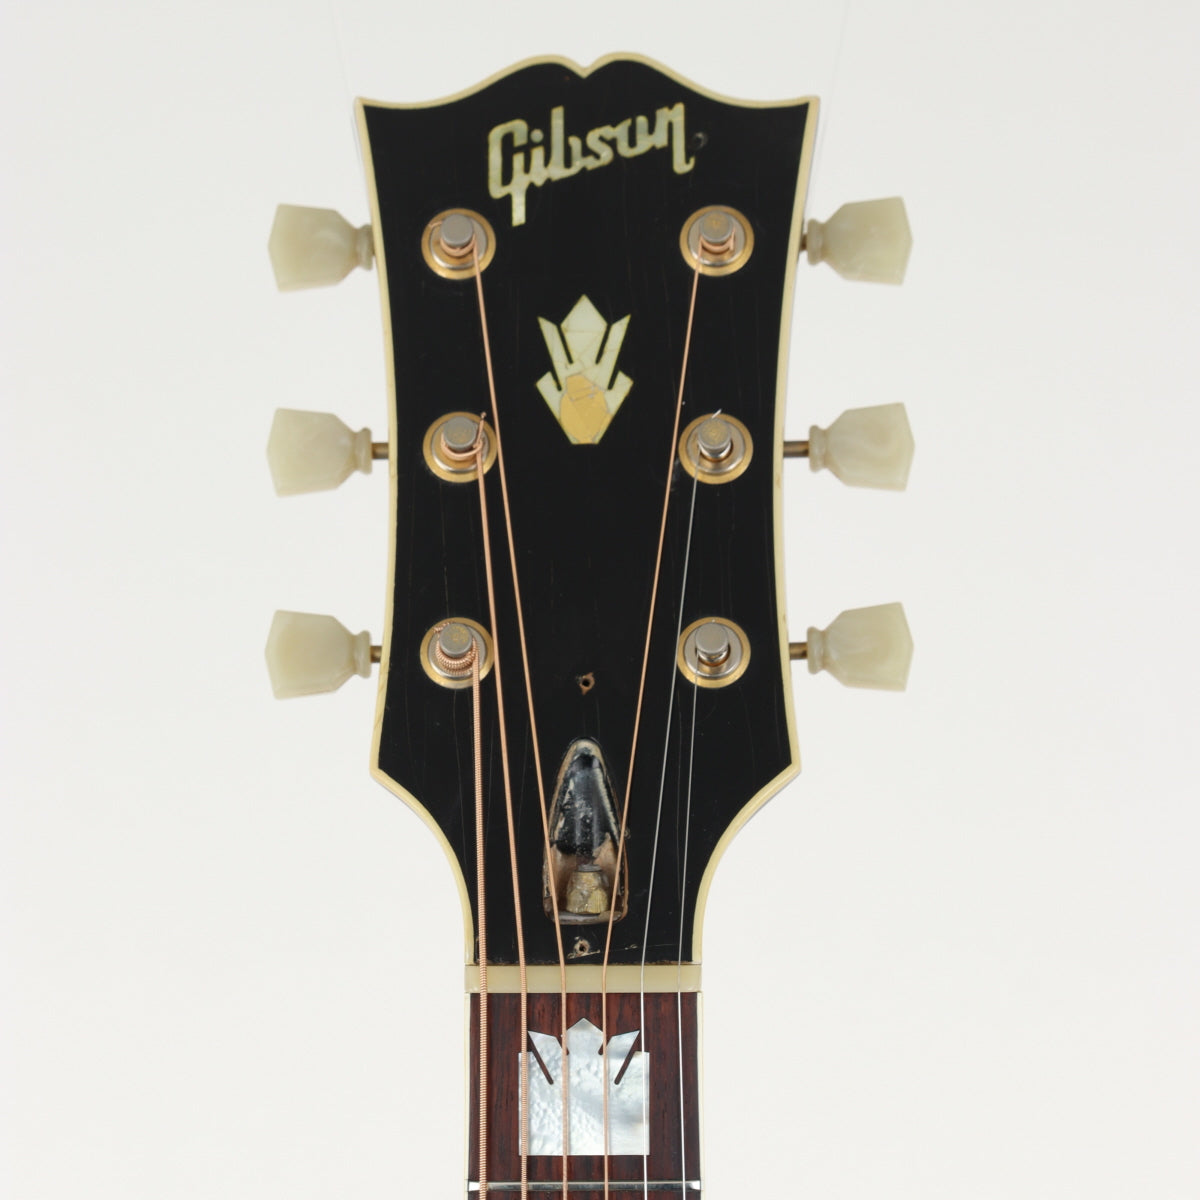 [SN 92306004] USED Gibson / 1958 J-200 1996 [12]